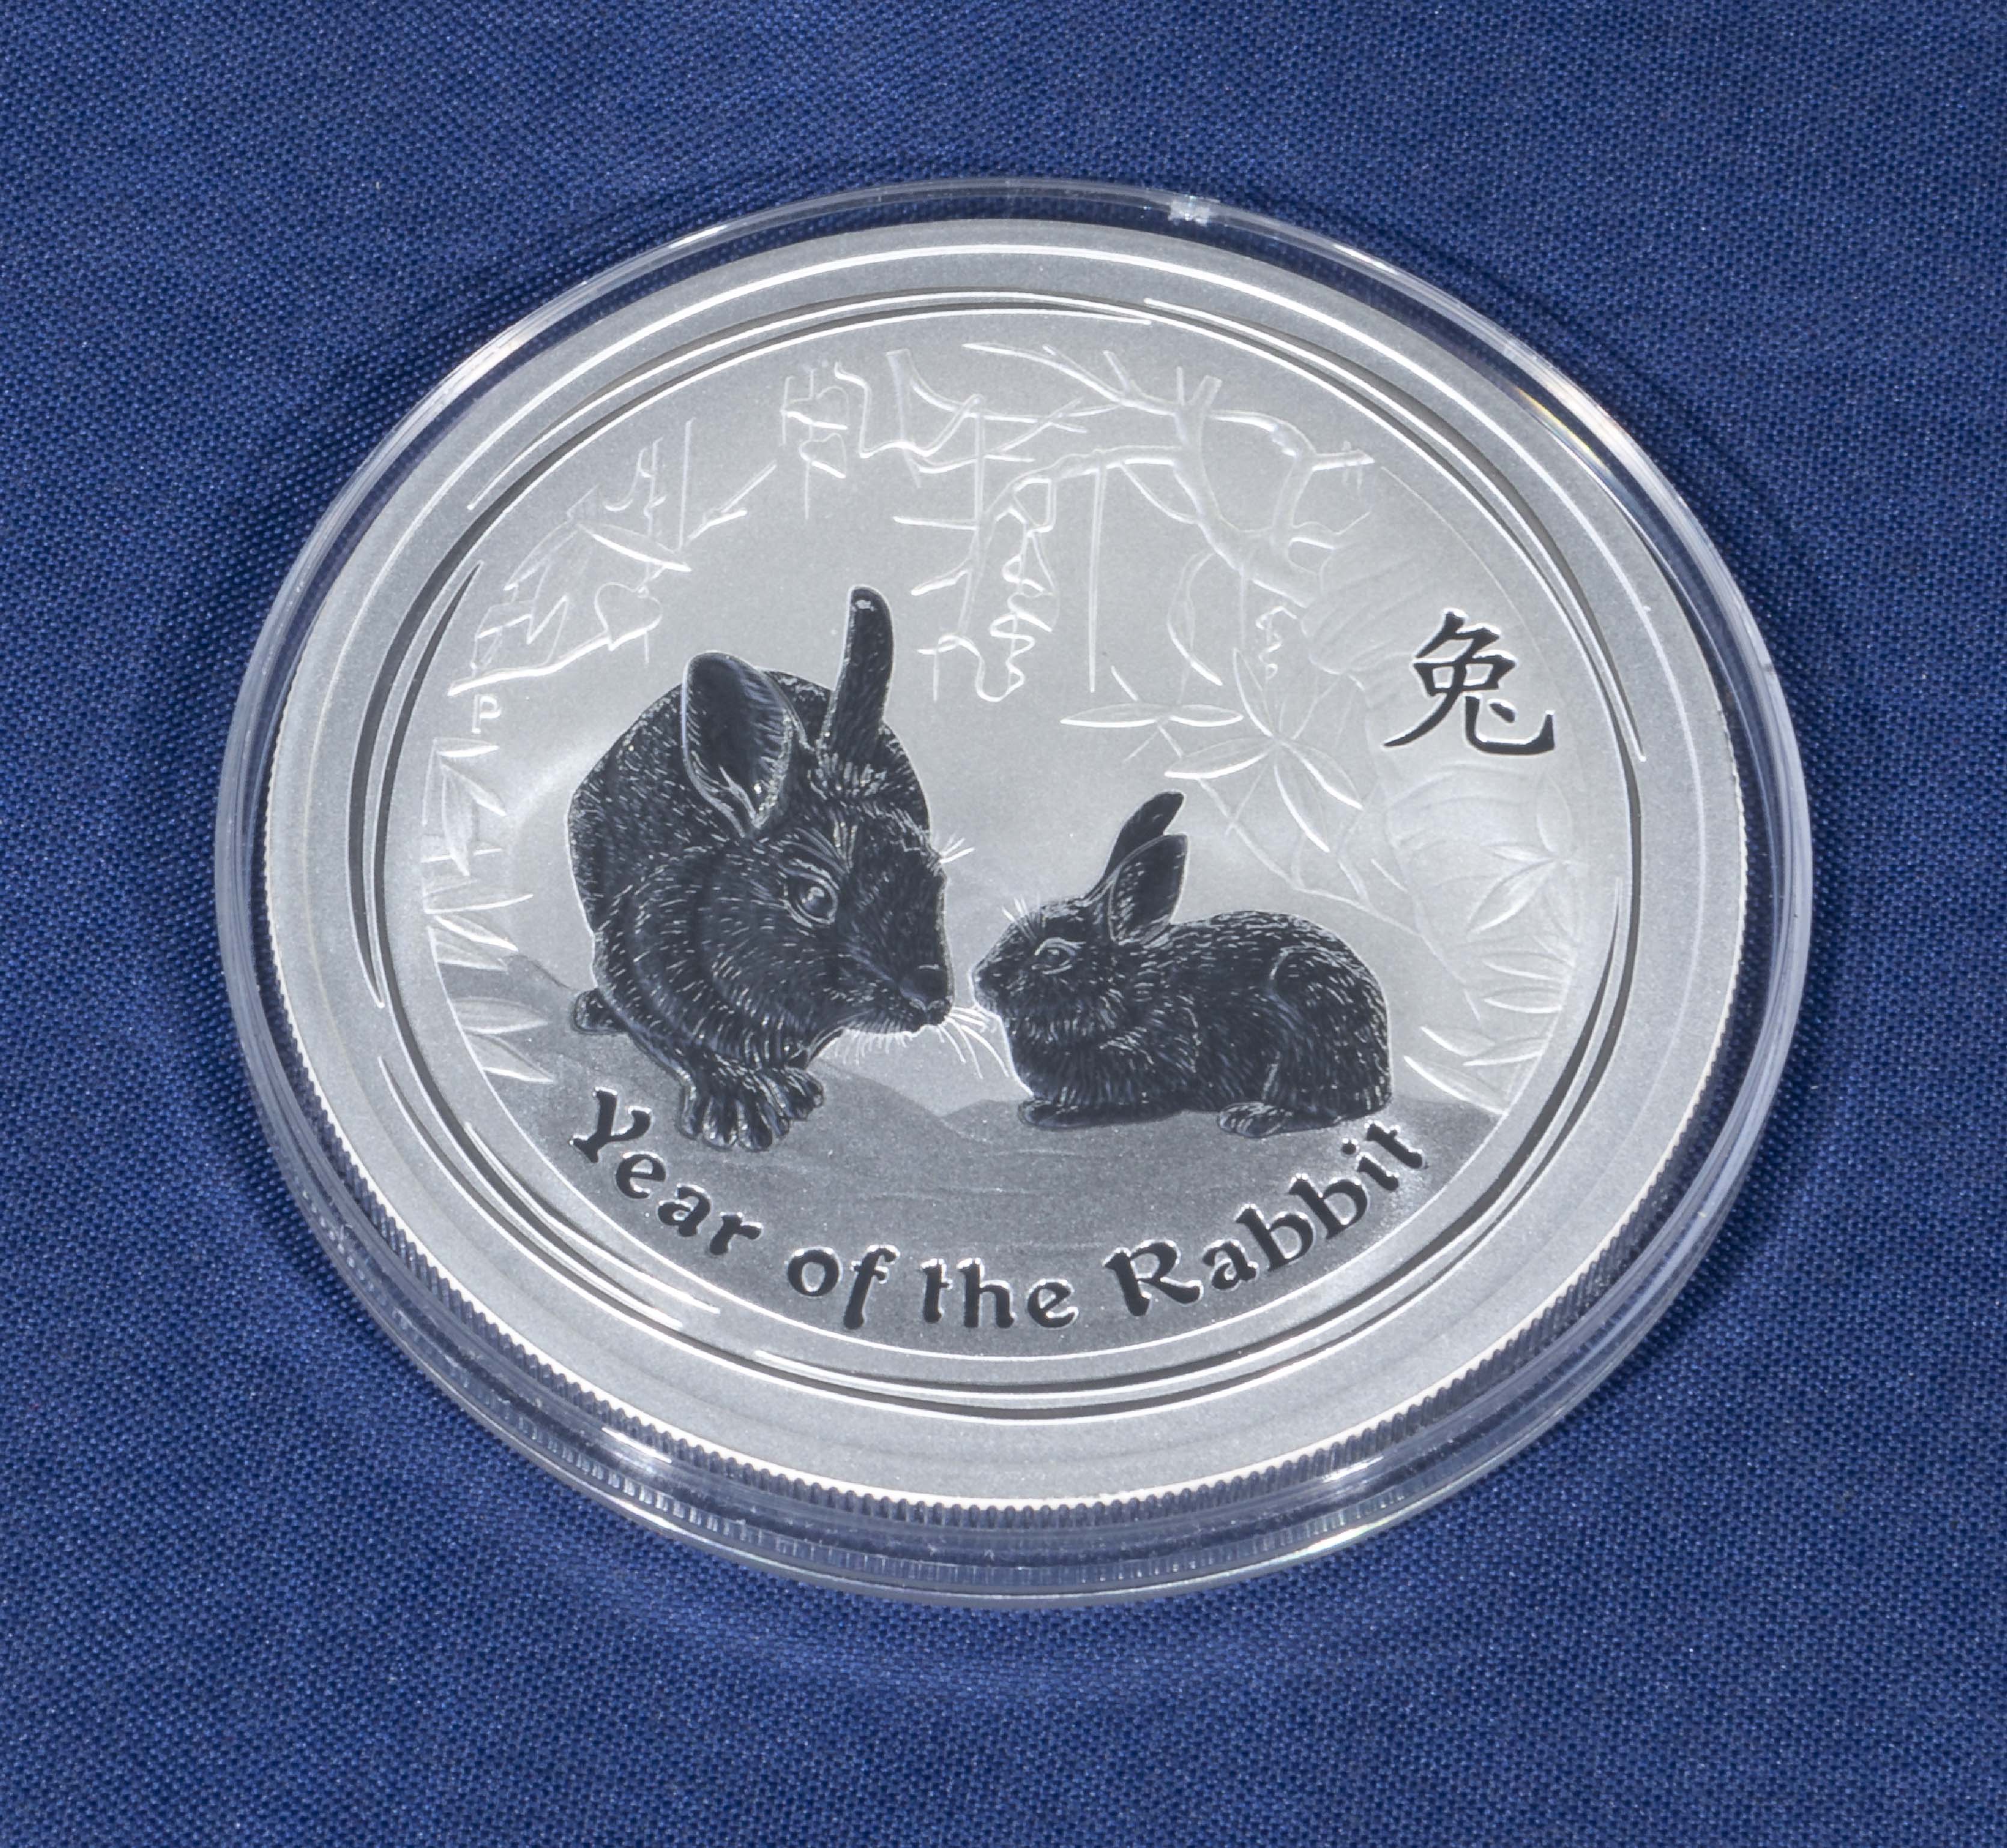 An Australian 'Year of the Rabbit' 2oz fine silver 999 two dollar piece, year 2011